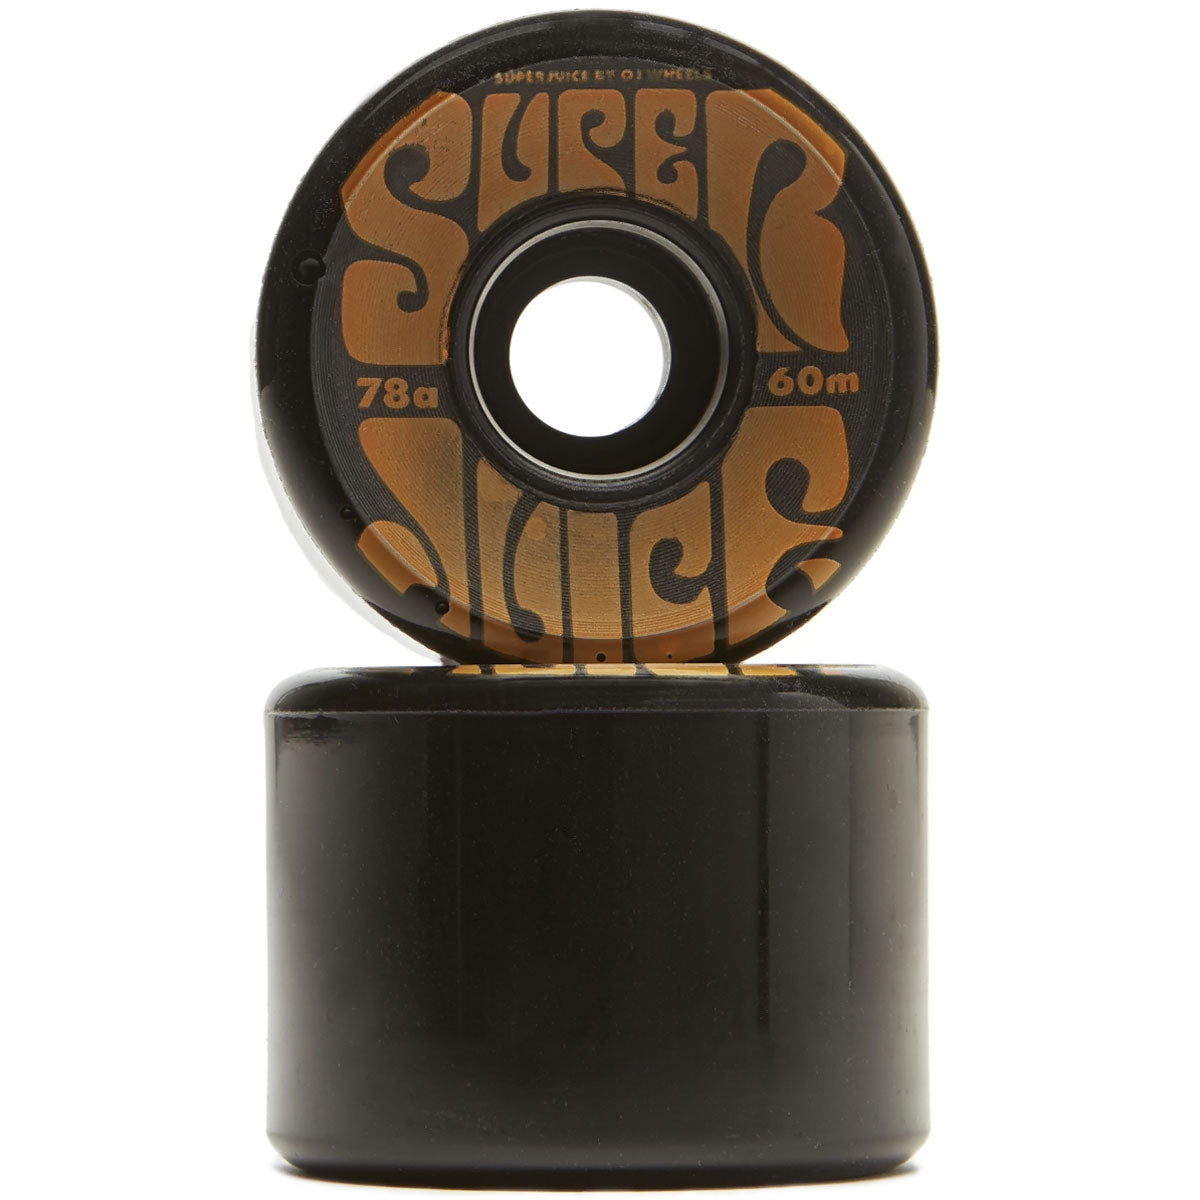 OJ Super Juice 78a Skateboard Wheels - Black - 60mm image 2